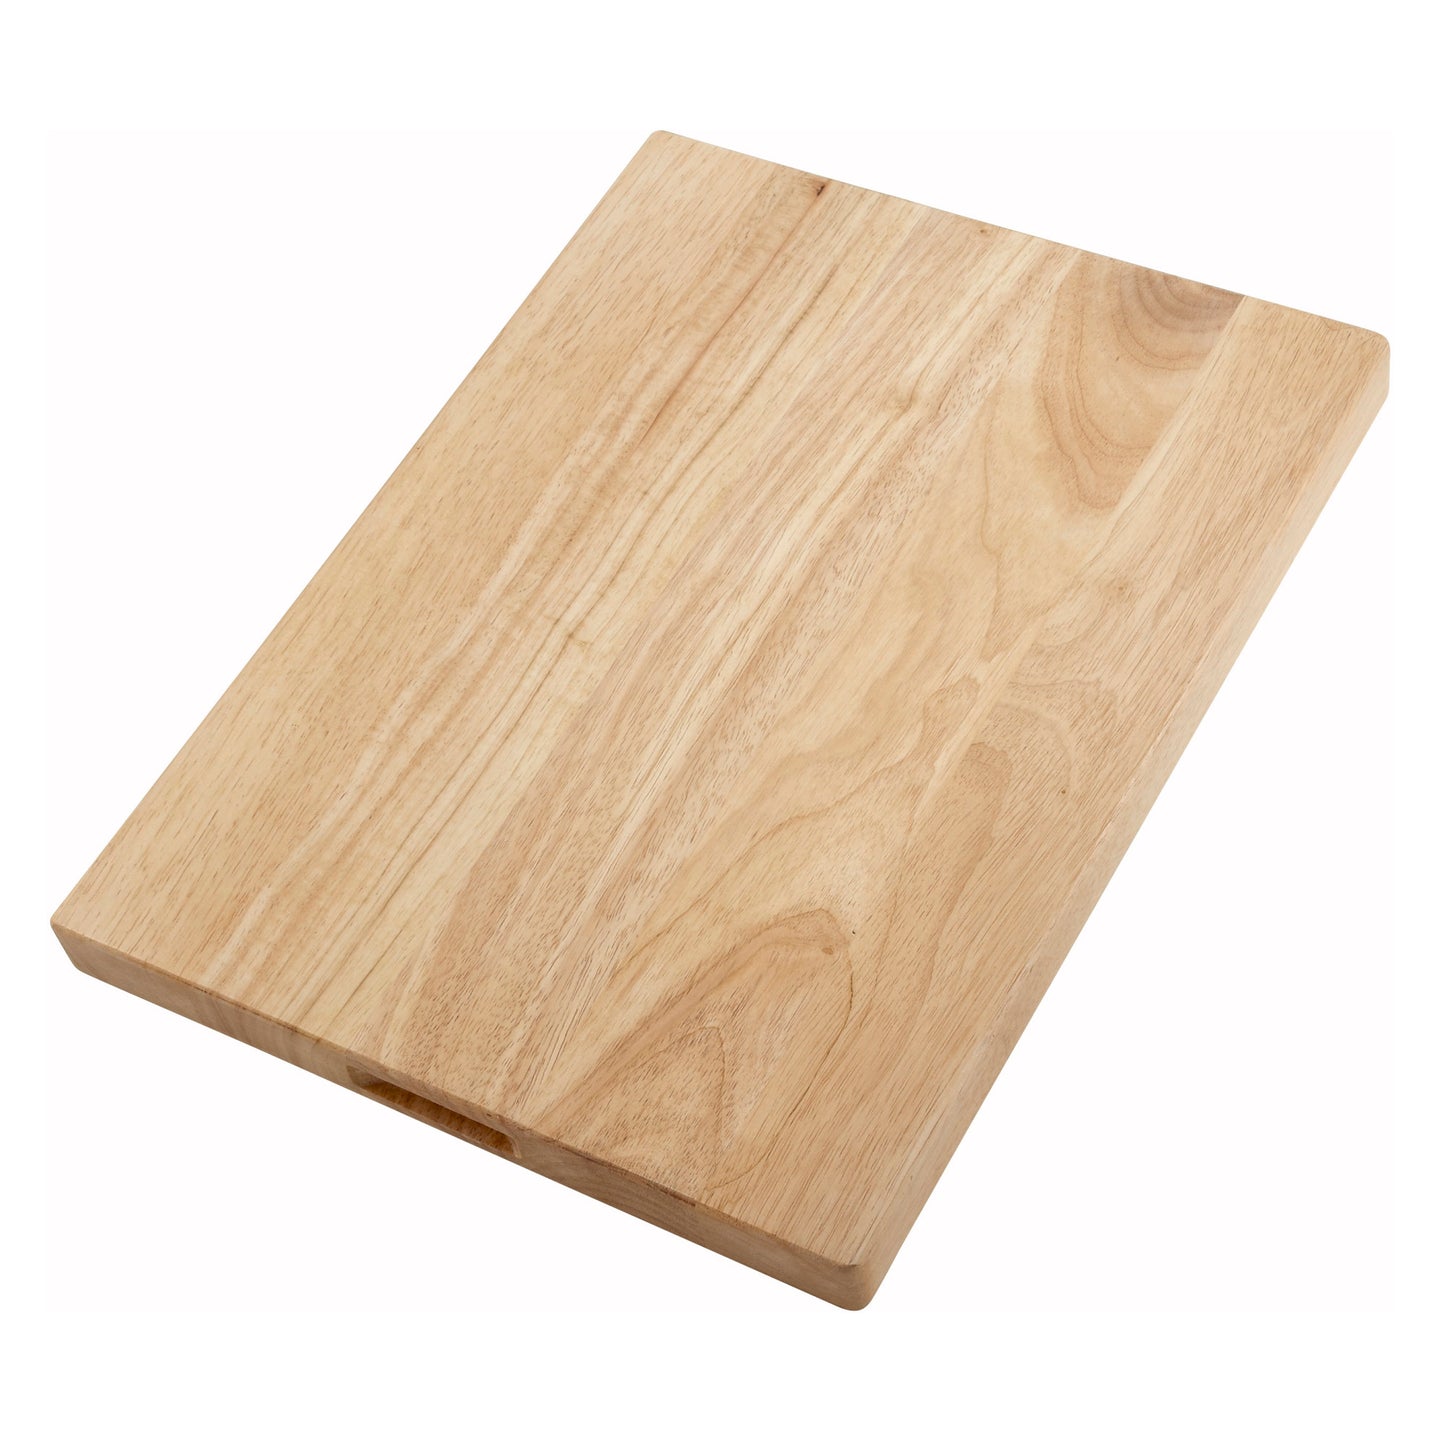 WCB-1520 - Wooden Cutting Boards - 15 x 20